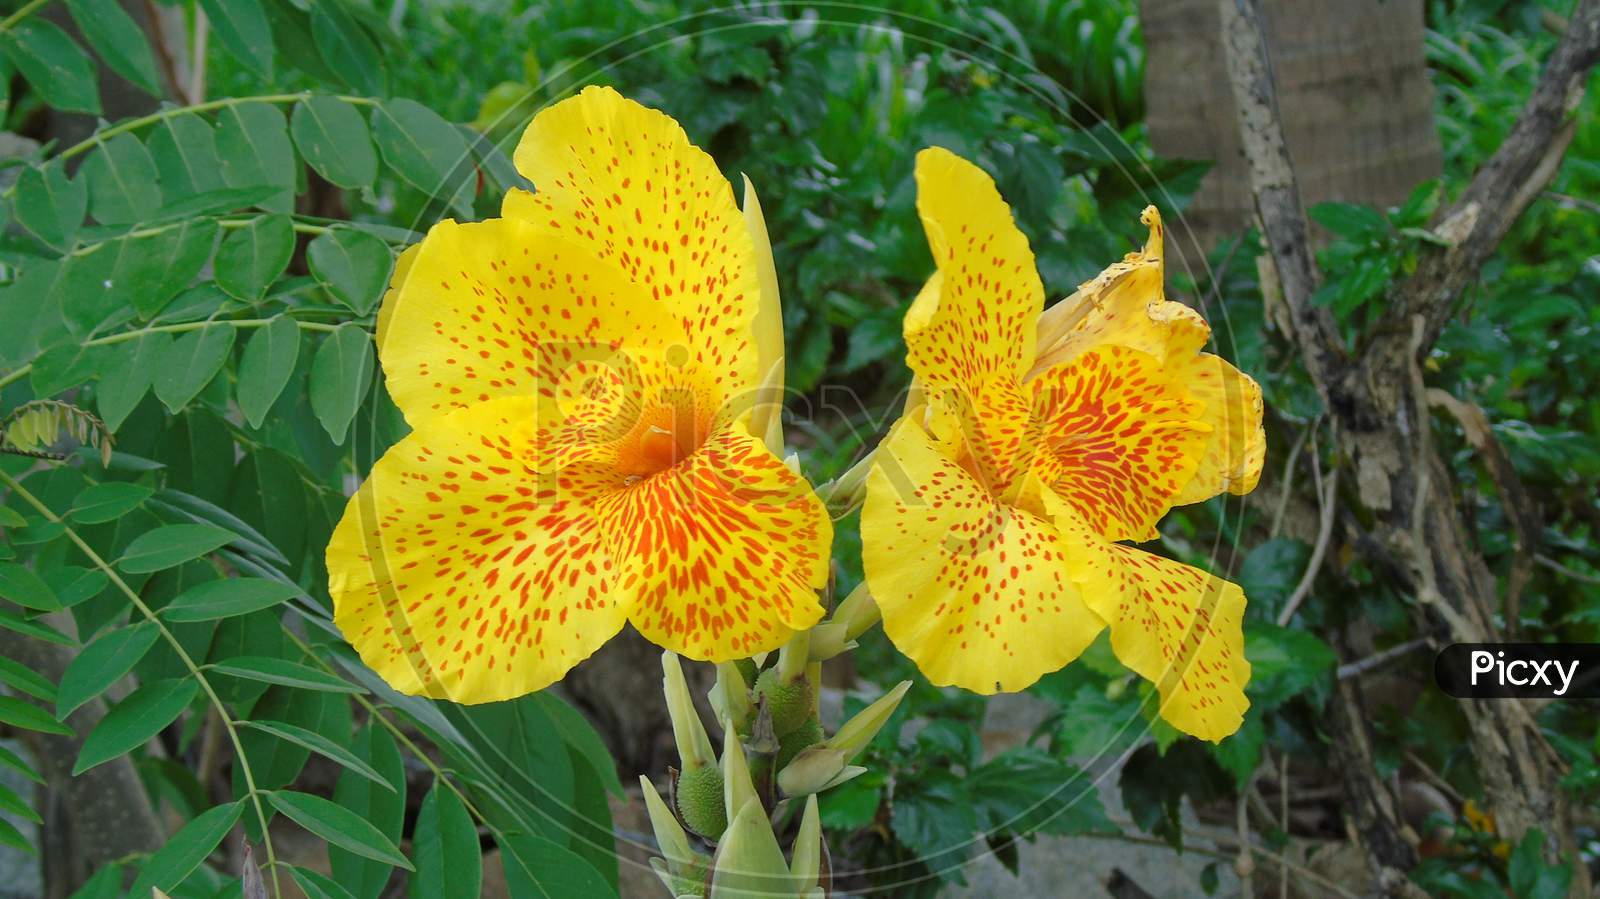 Yellow canna flower in a garden